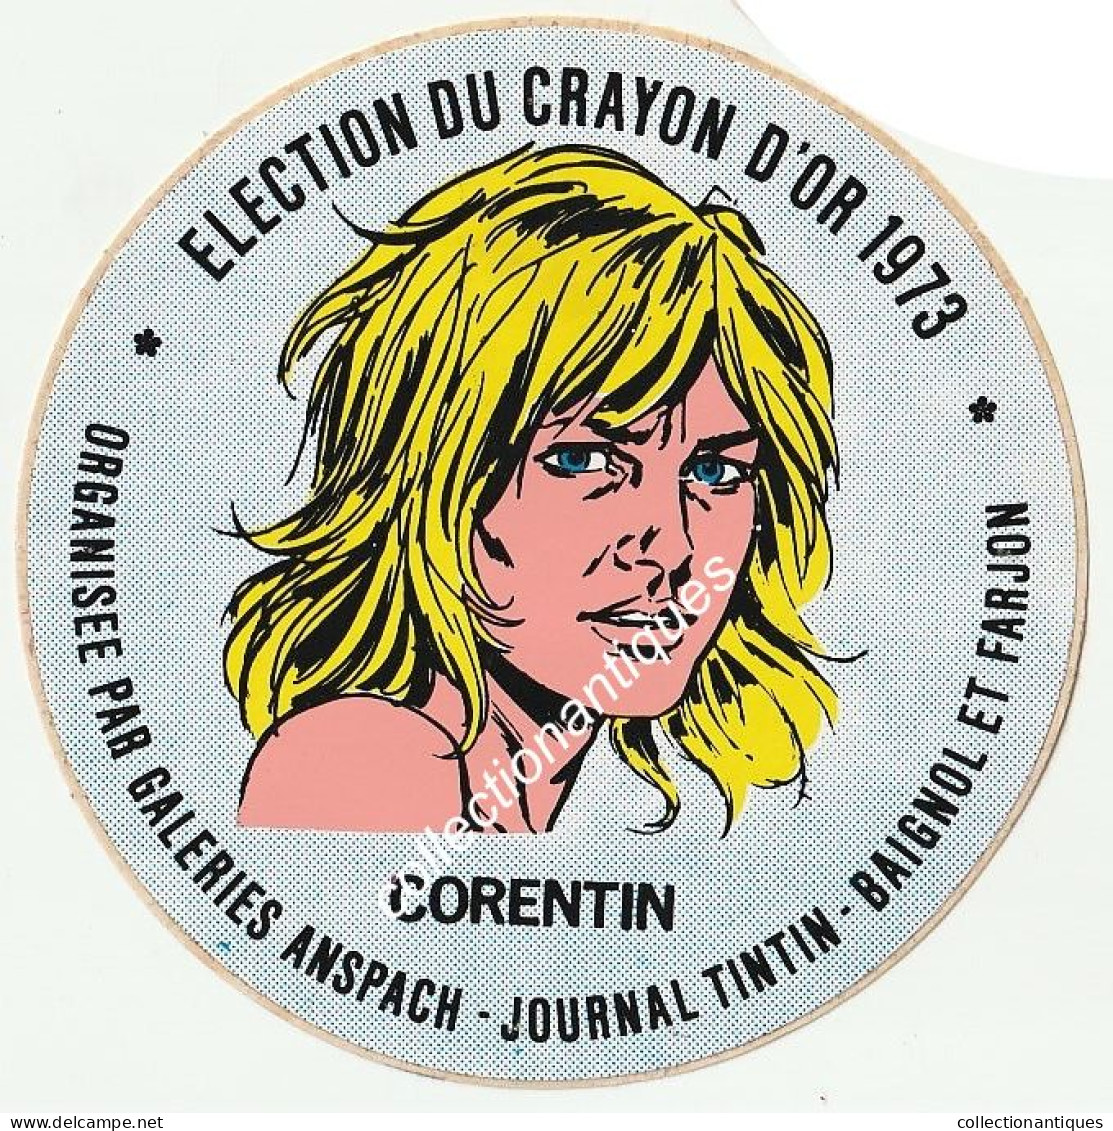 Corentin RARE Sticker Autocollant Election Du Crayon D'Or 1973 Galeries Anspach Journal Tintin Baignol Et Farjon - Zelfklevers